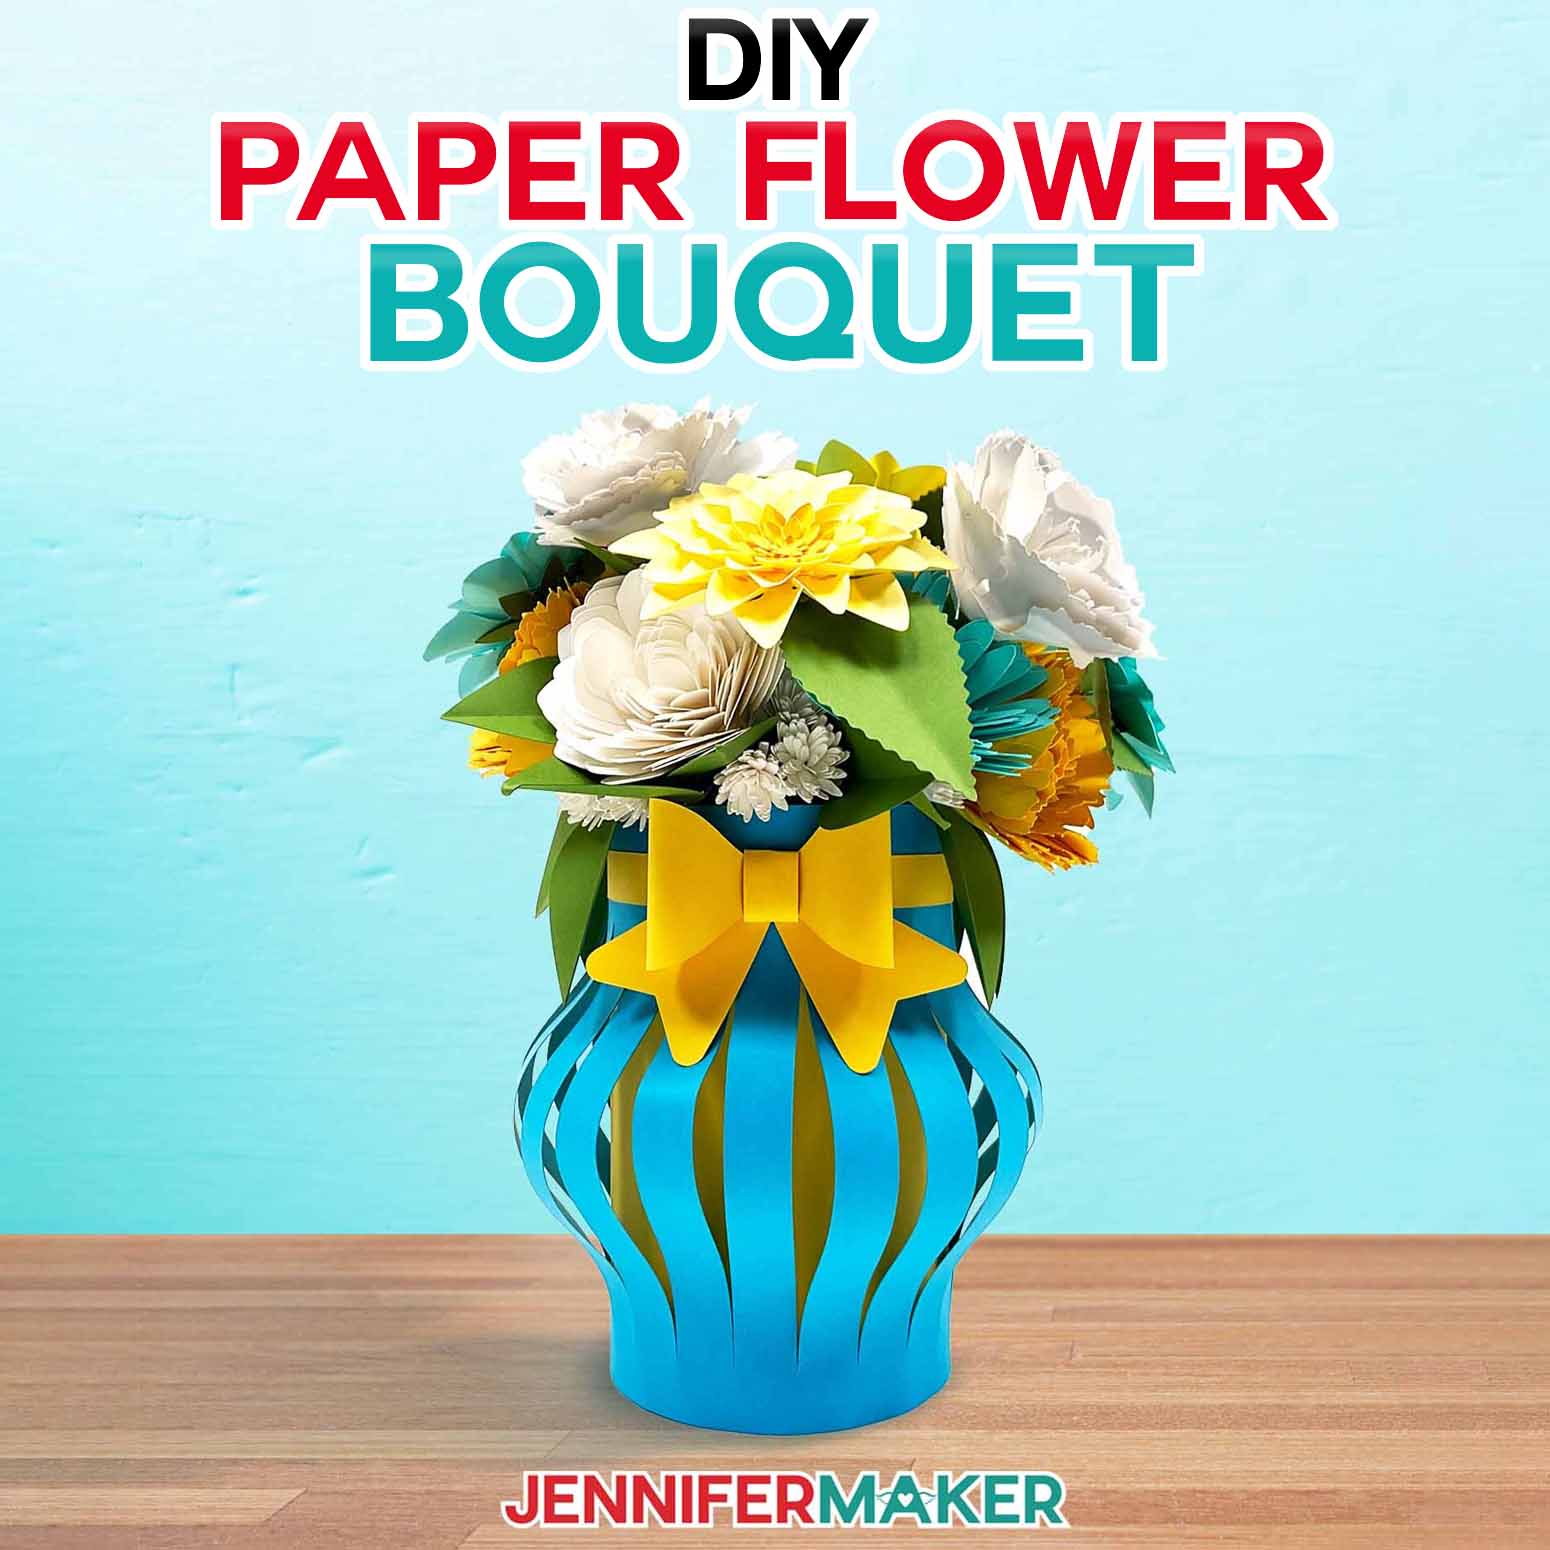 Paper flower bouquet using a JenniferMaker tutorial.